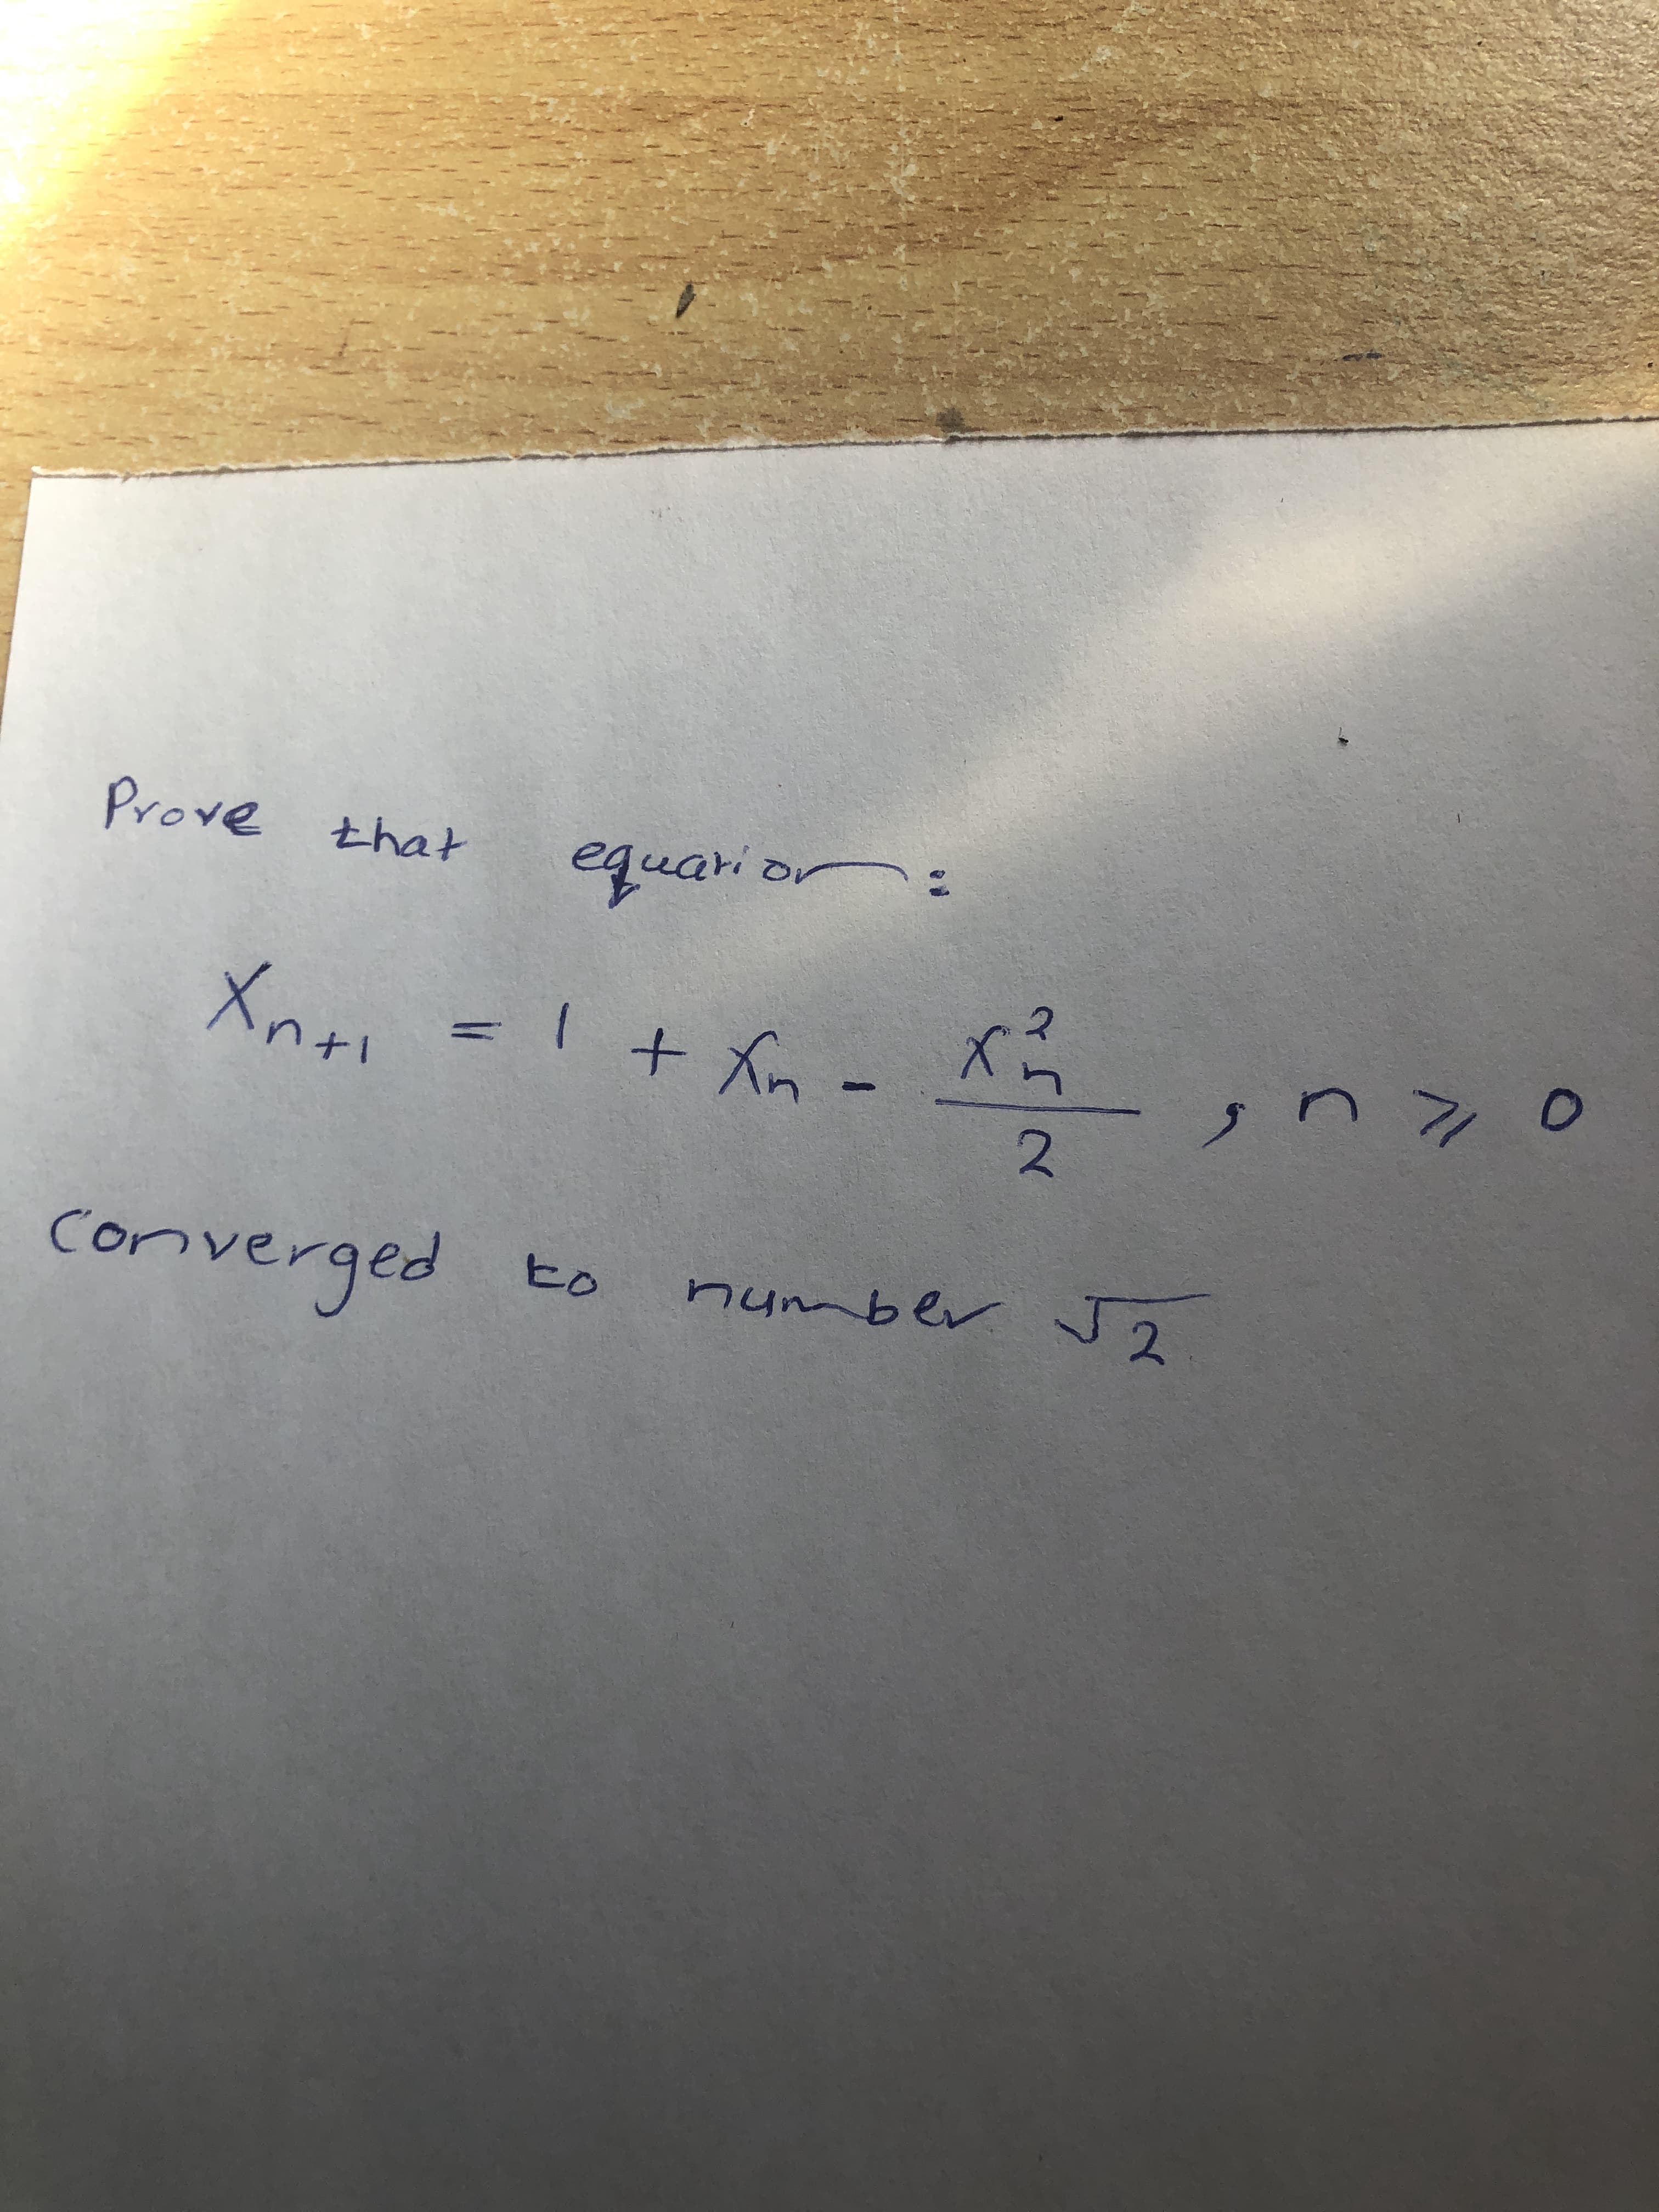 Prove that
or
quari
-1+ X.- ズい
2.
X.
ntl
converged
number Ja
to
2.
